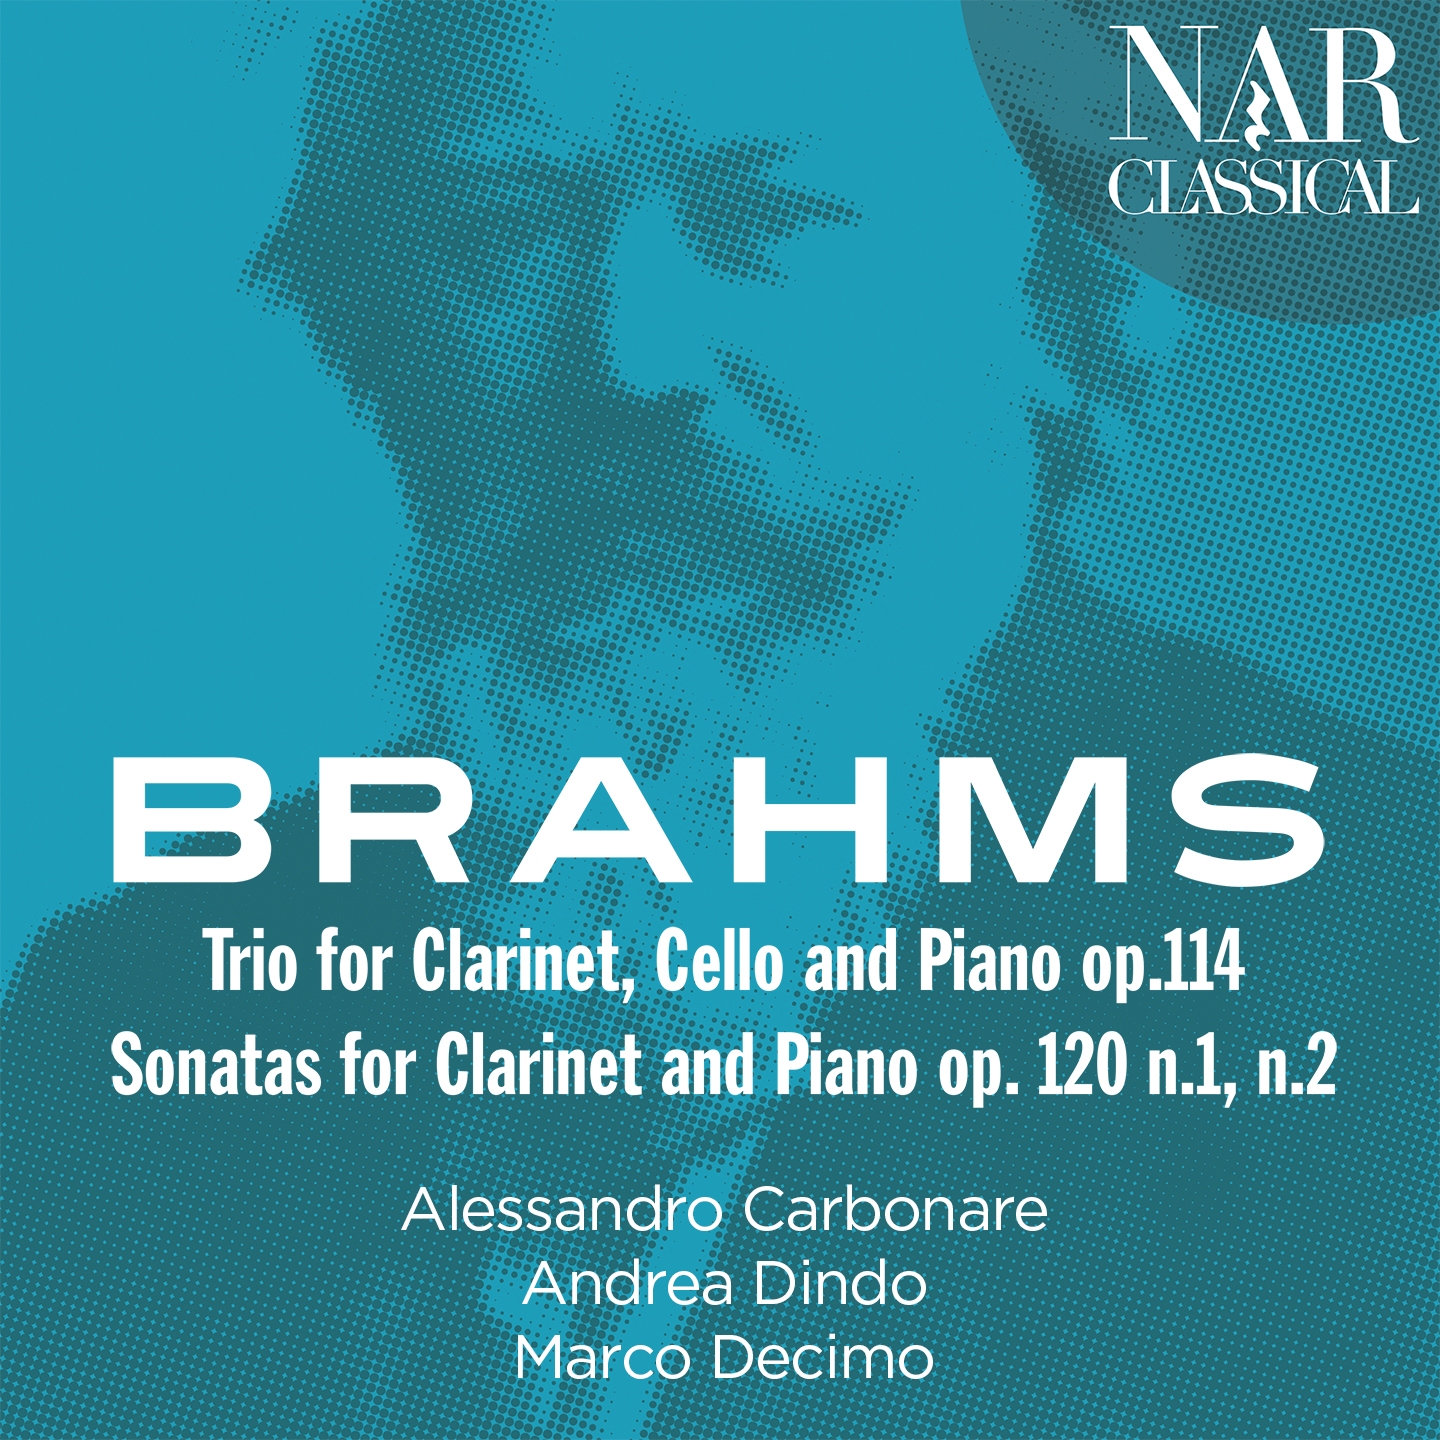 Clarinet Sonata No. 2 in E-Flat Major, Op.120 No. 2: I. Allegro amabile